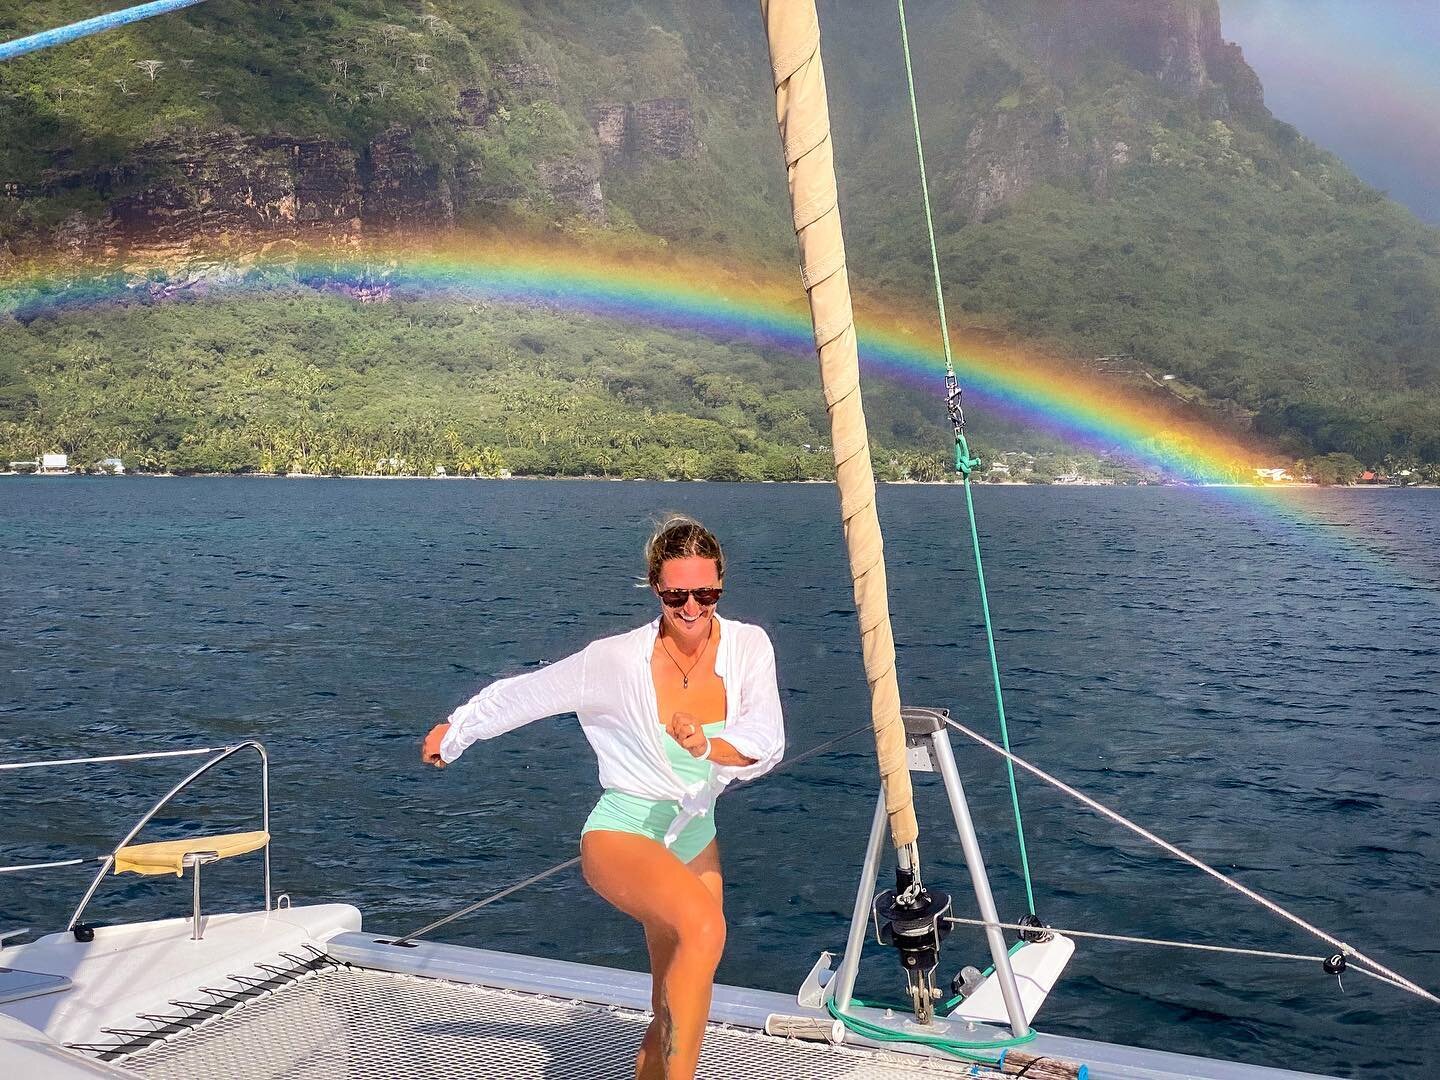 Sailing through the rainbow finish line to the magic of Moorea!

#sailing #keepmooreawild #wesail #myboatandi2022 #saillife #rainbows #moorea #sailingaroundtheworld #magicalmoments #ycass